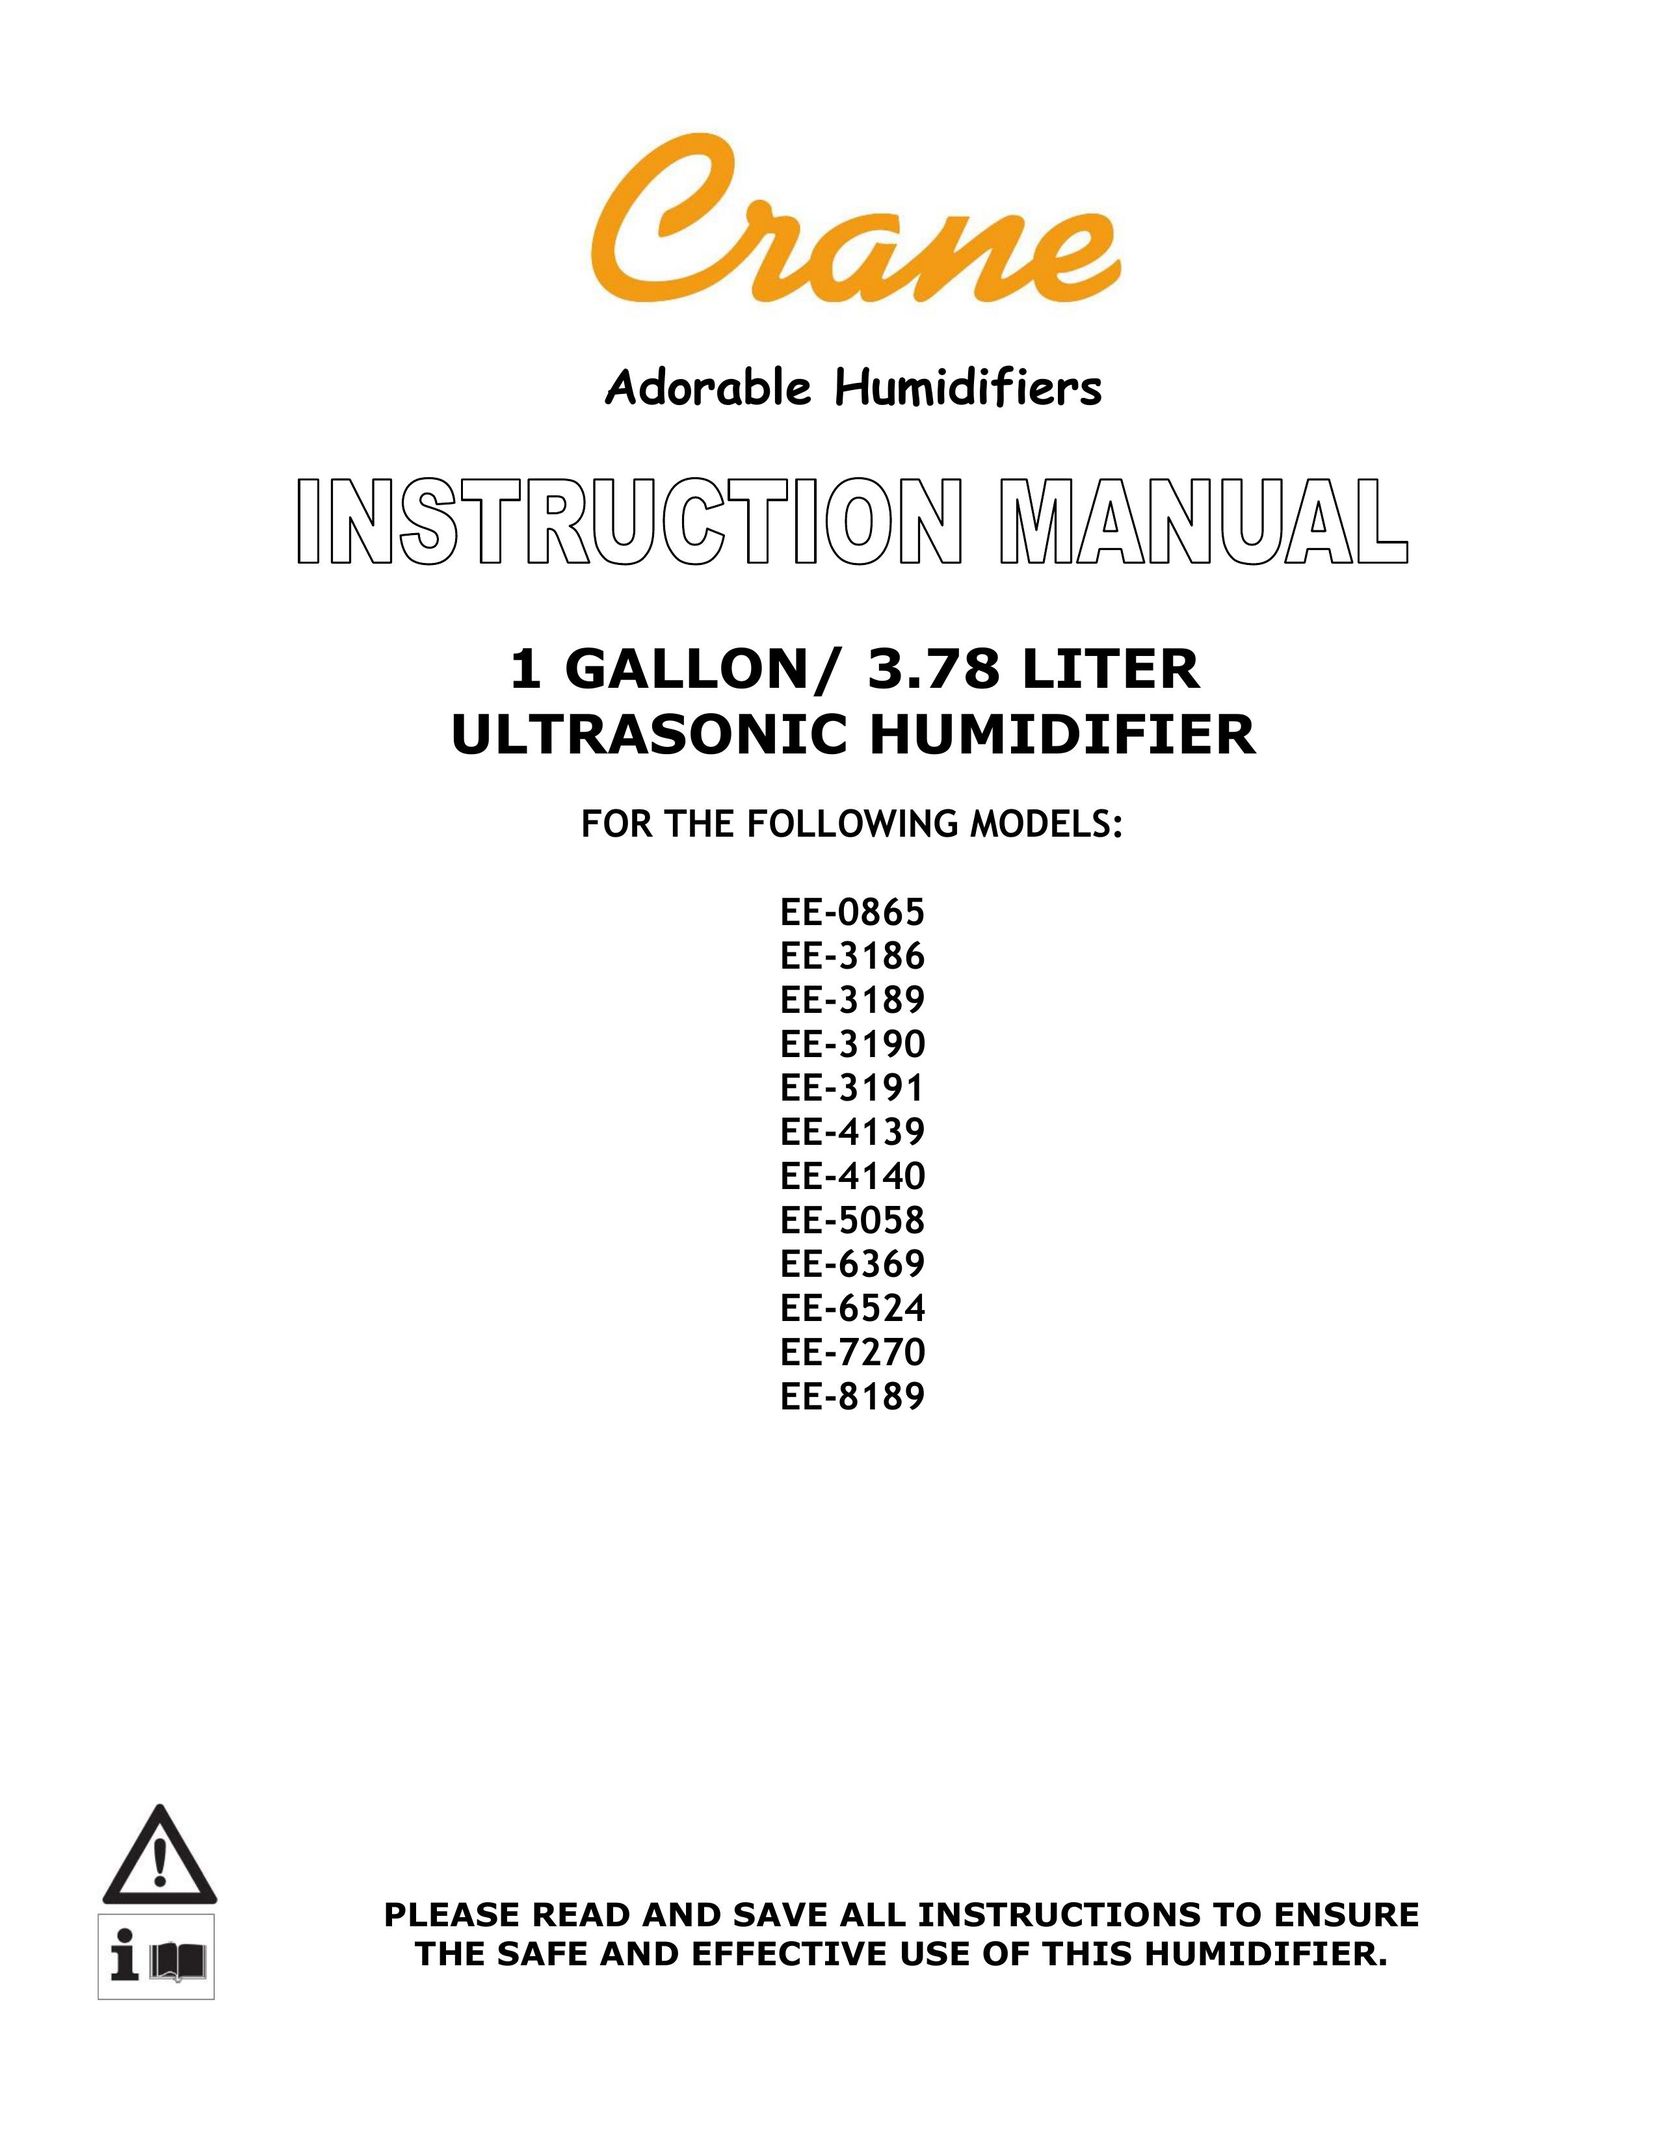 Crane EE-6369 Humidifier User Manual